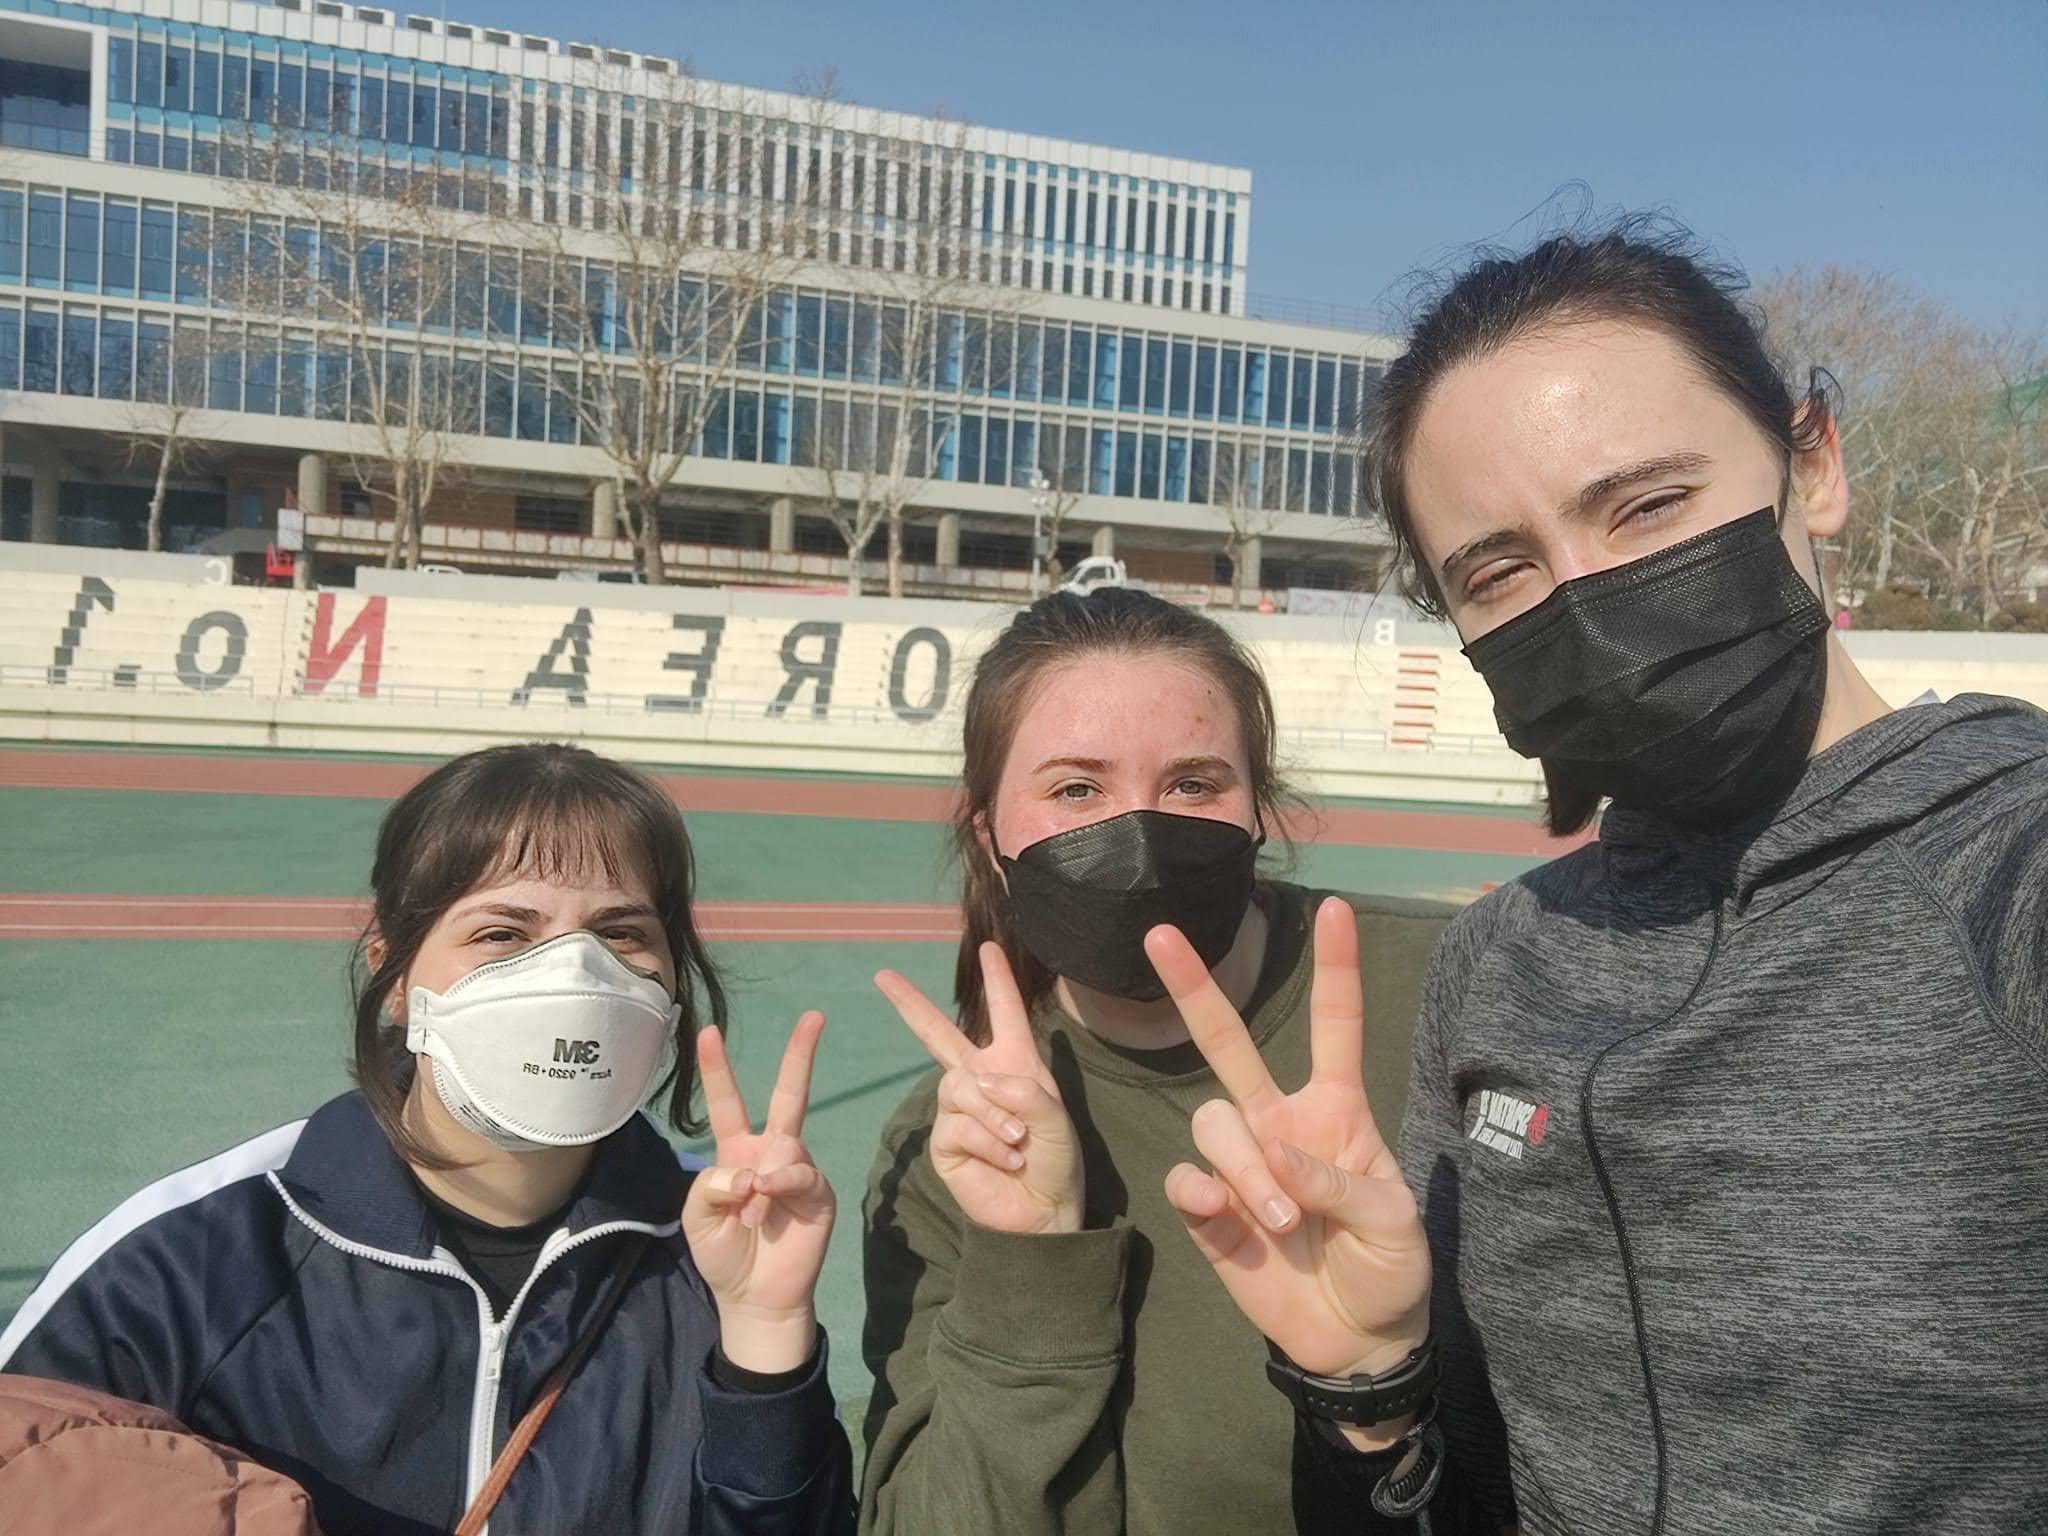 Oswego student Molly Bogart (center) explores Korea with some new friends